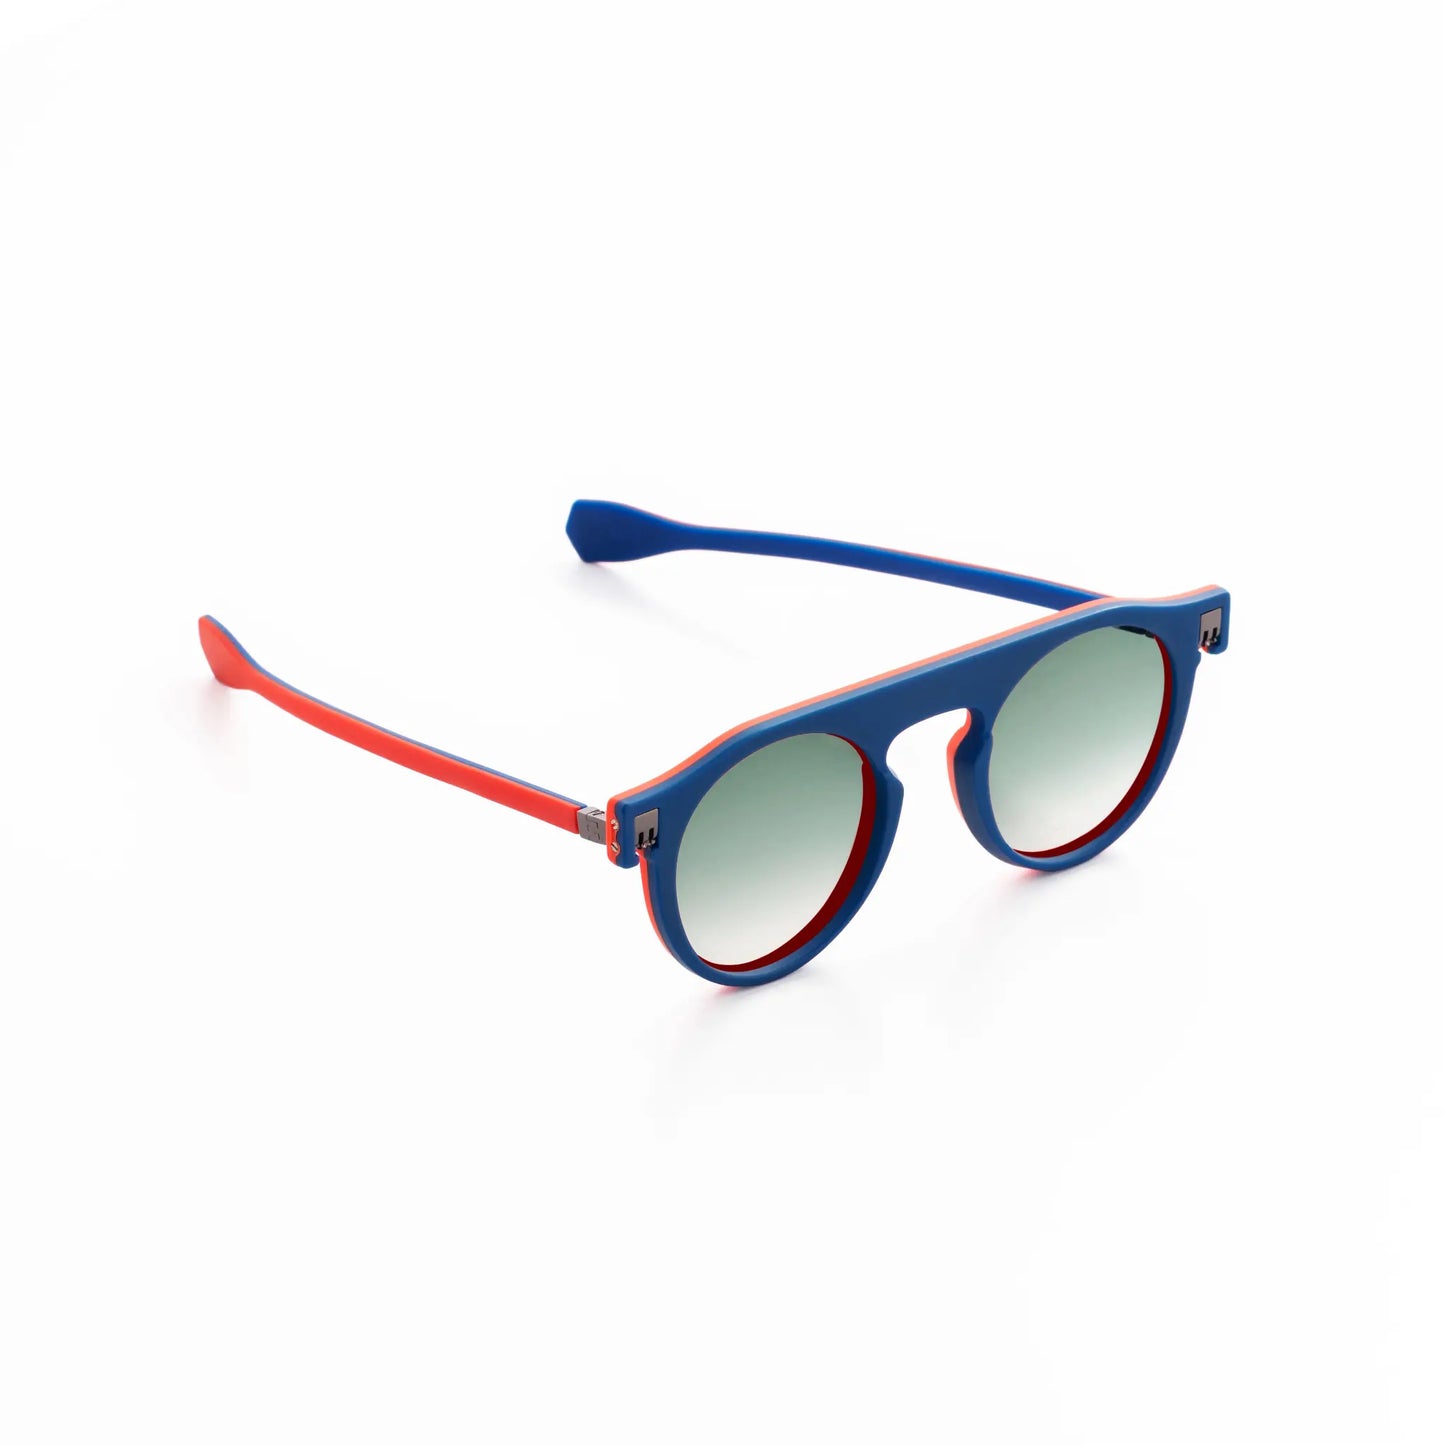 Reverso sunglasses blue & red reversible & ultra light side view 2